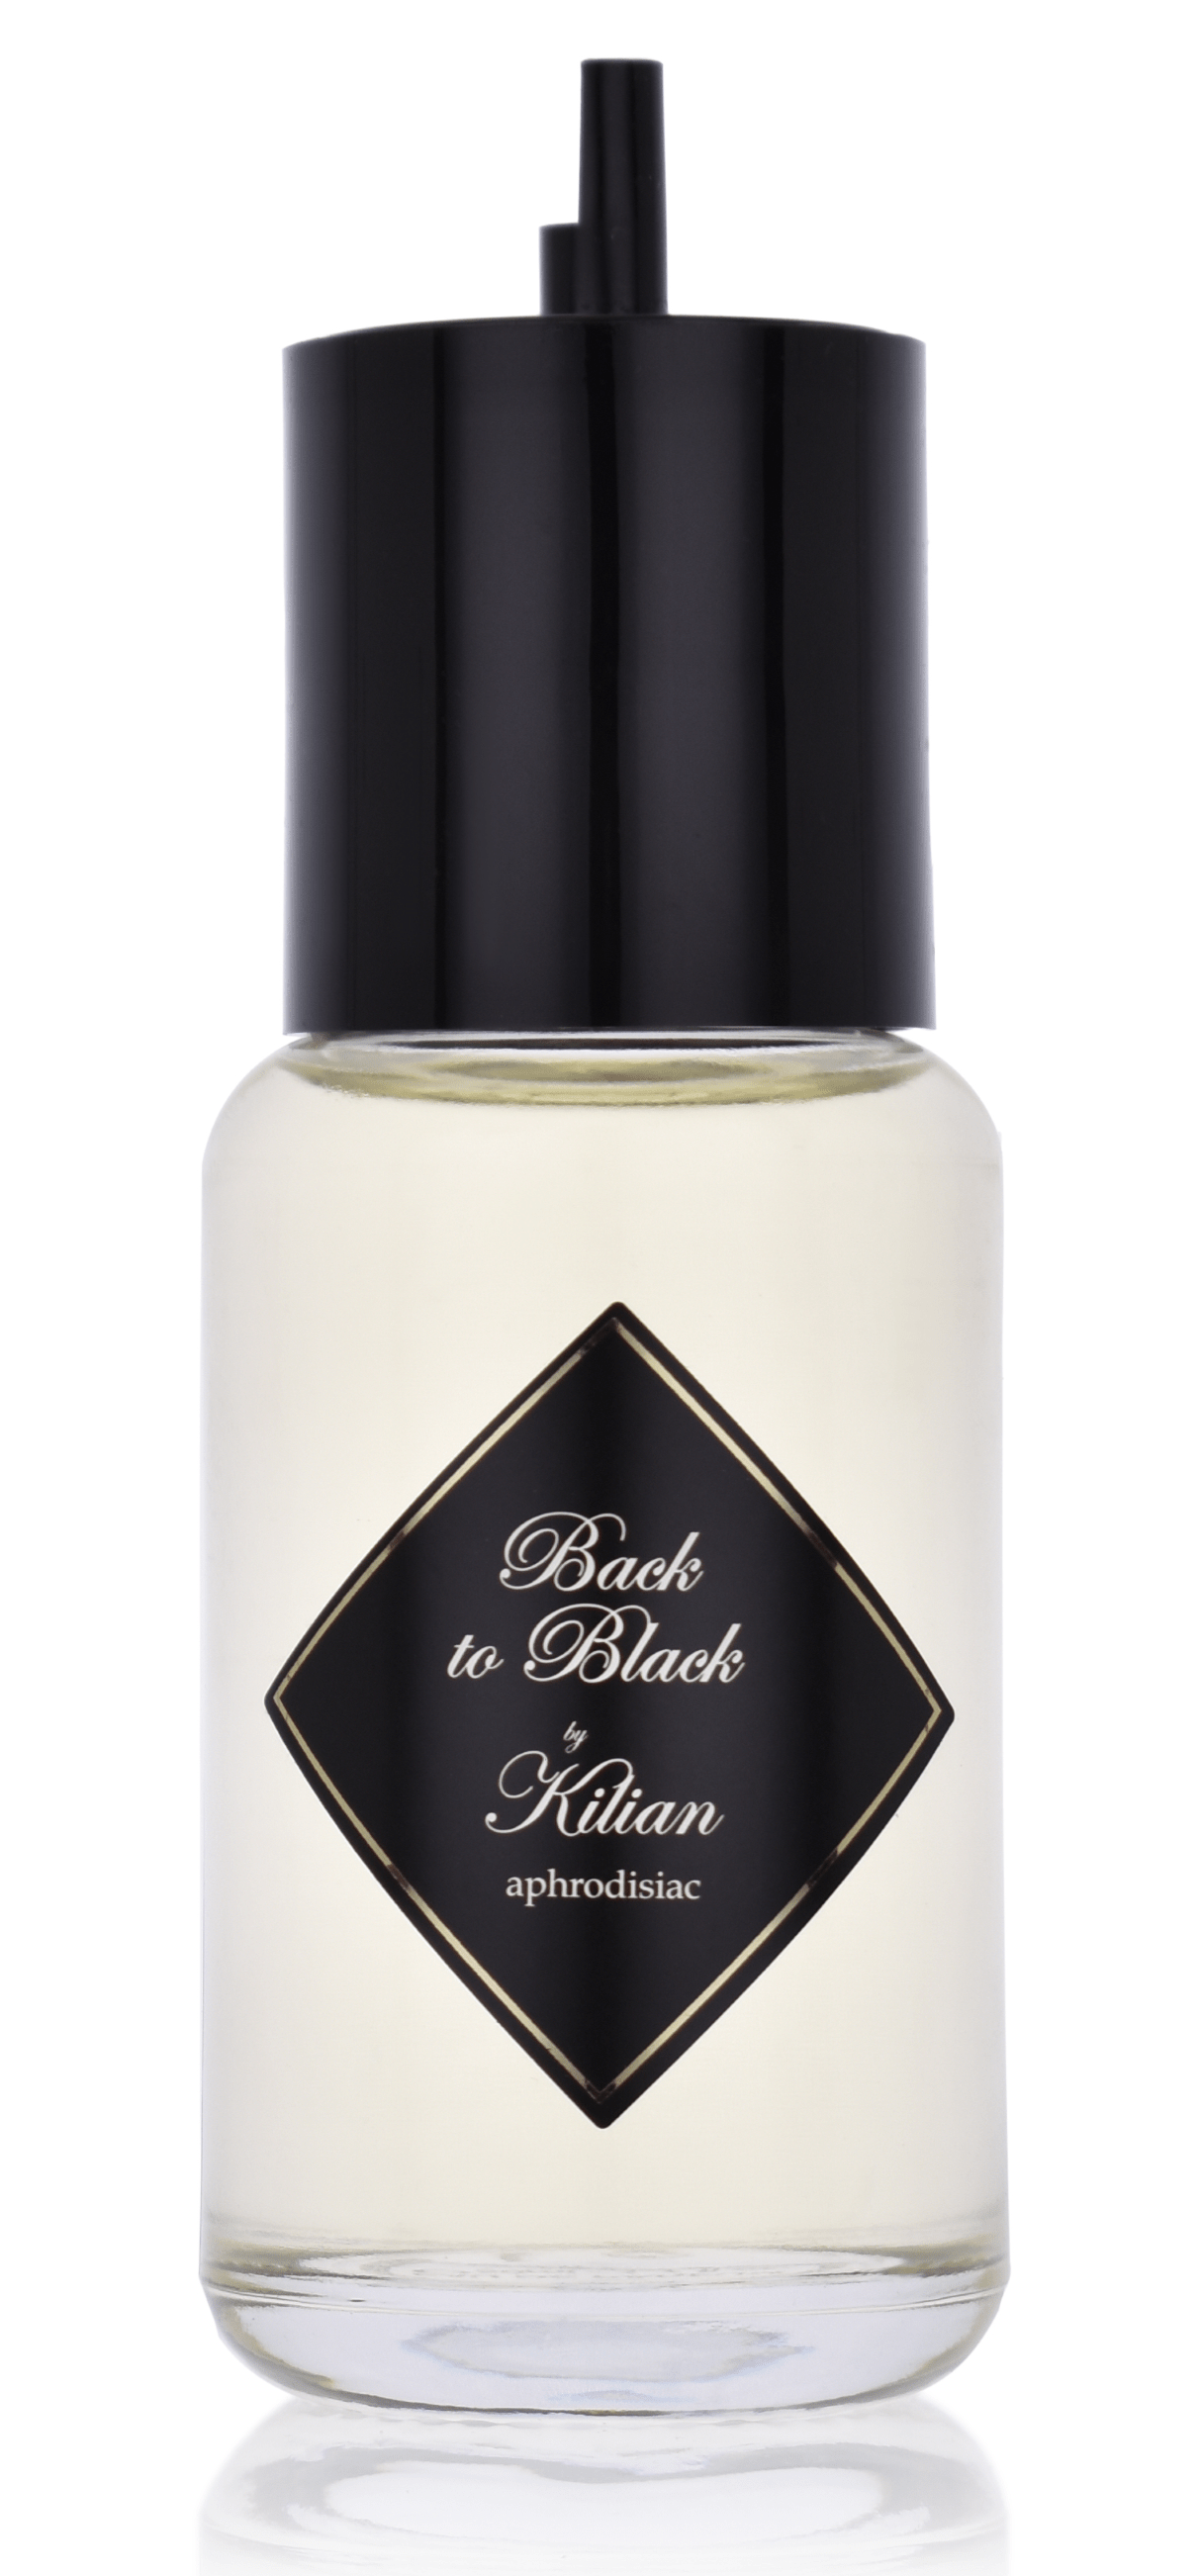 Kilian Back to Black aphrodisiac 50 ml Eau de Parfum Refill